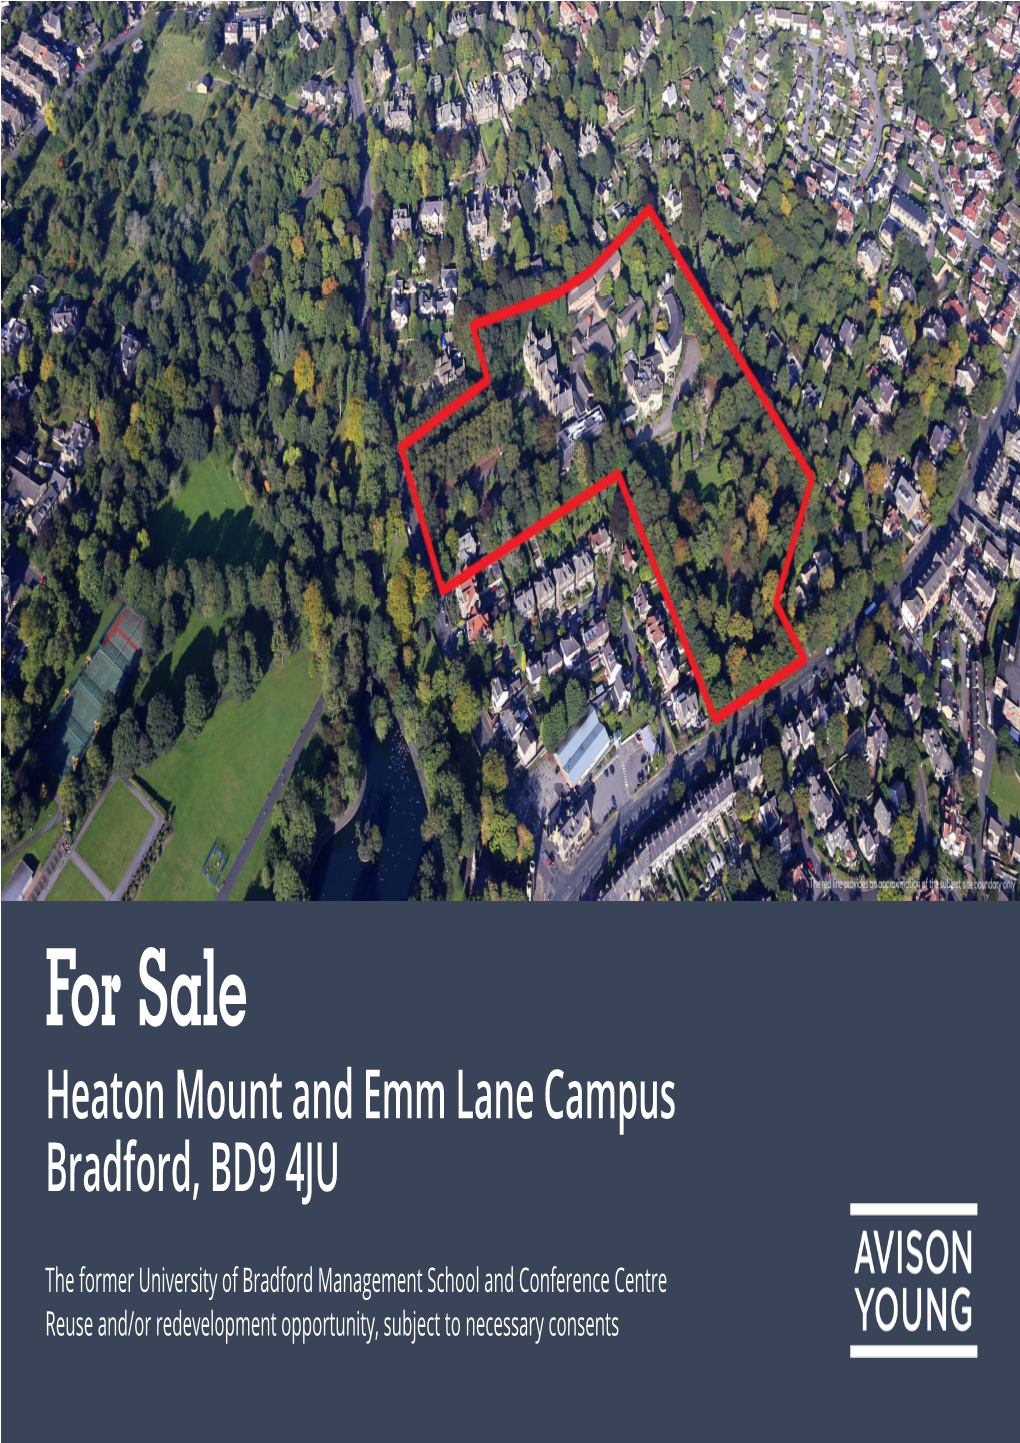 For Sale Heaton Mount and Emm Lane Campus Bradford, BD9 4JU